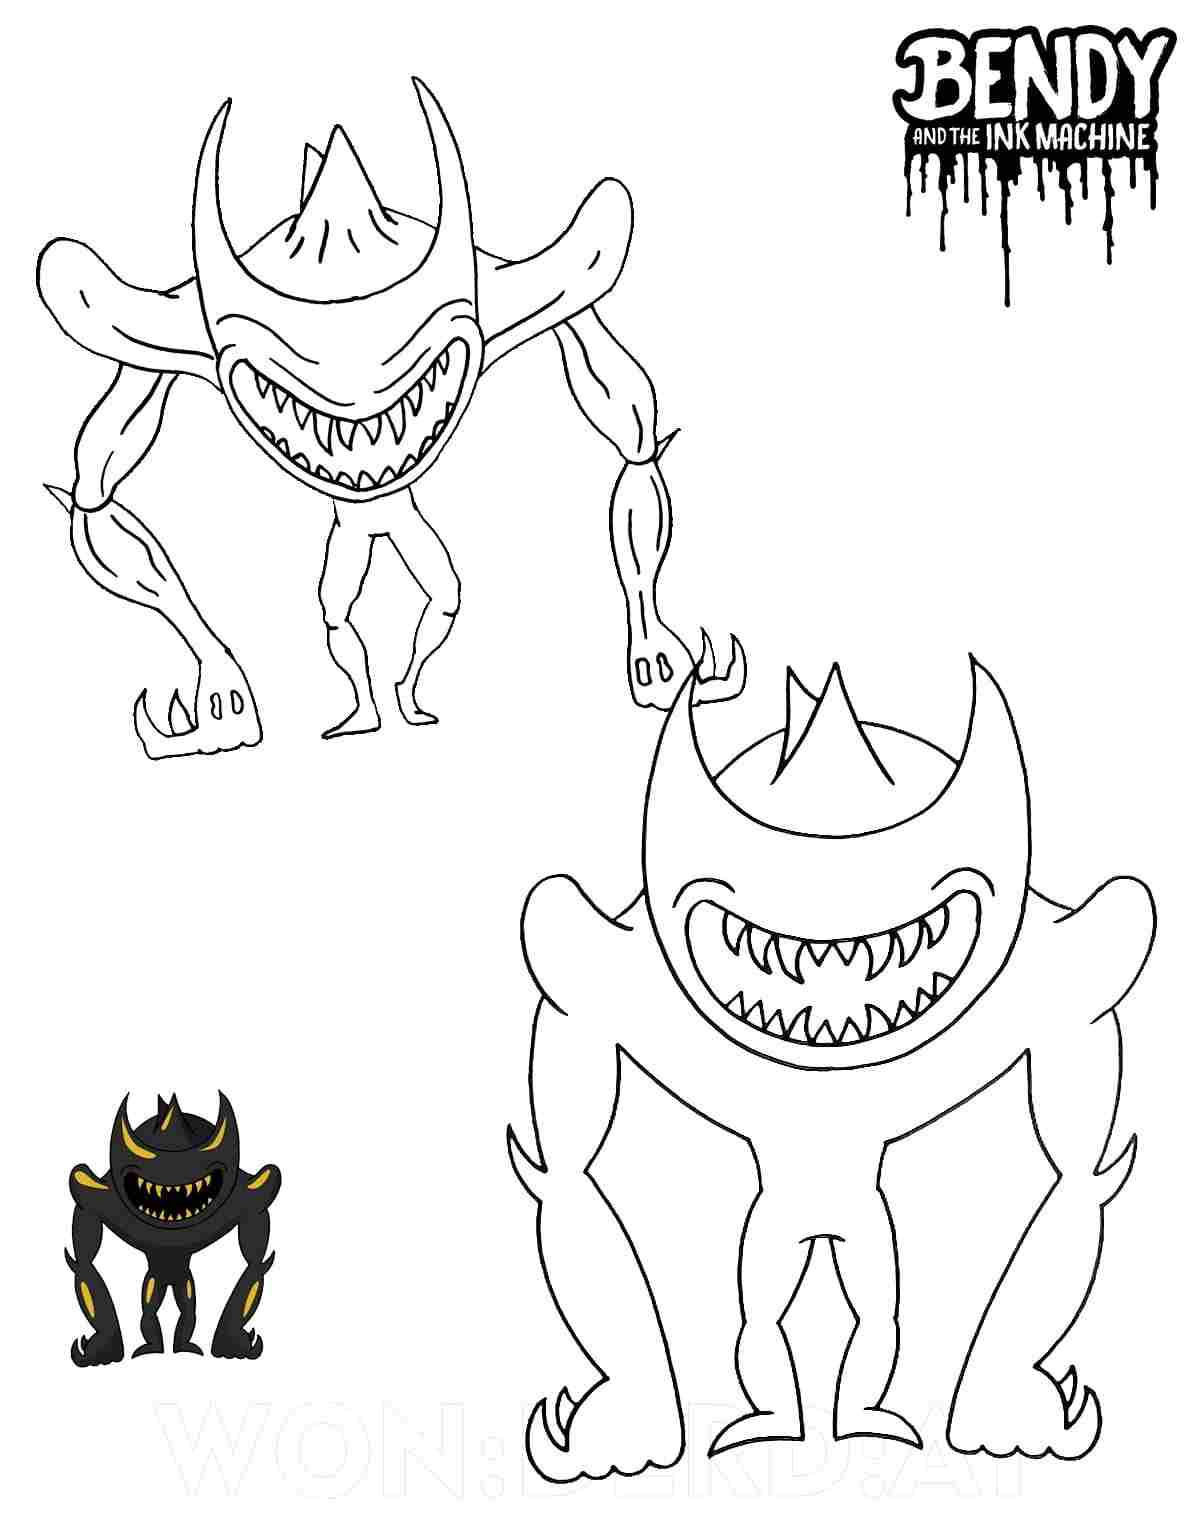 Demon Beast Bendy, o chefe final de Bendy e a Ink Machine de Bendy